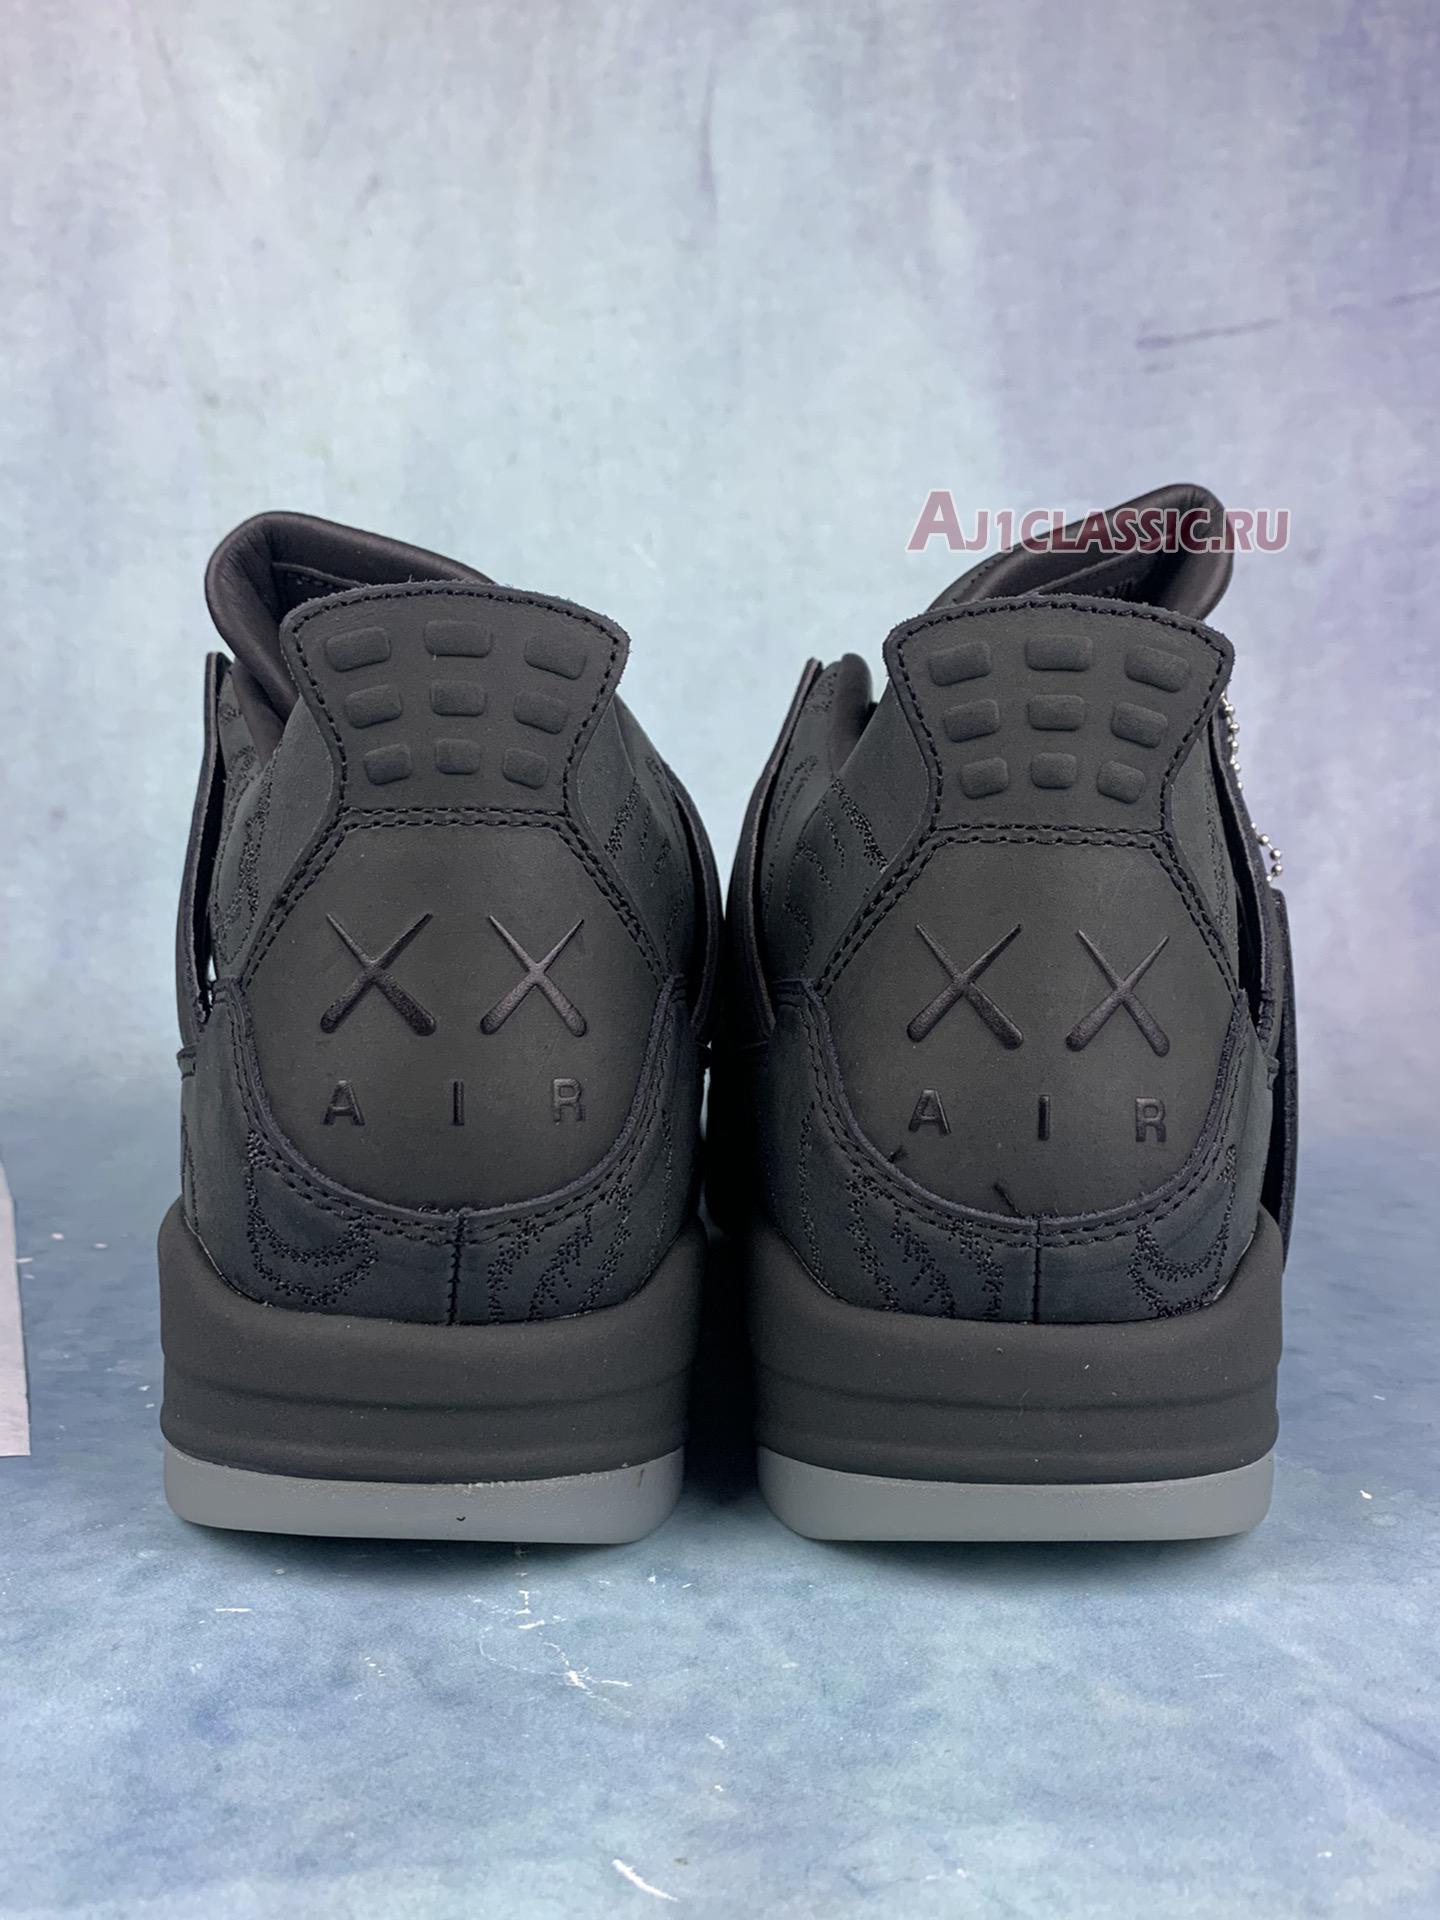 KAWS x Air Jordan 4 Retro "Black" 930155-001-2